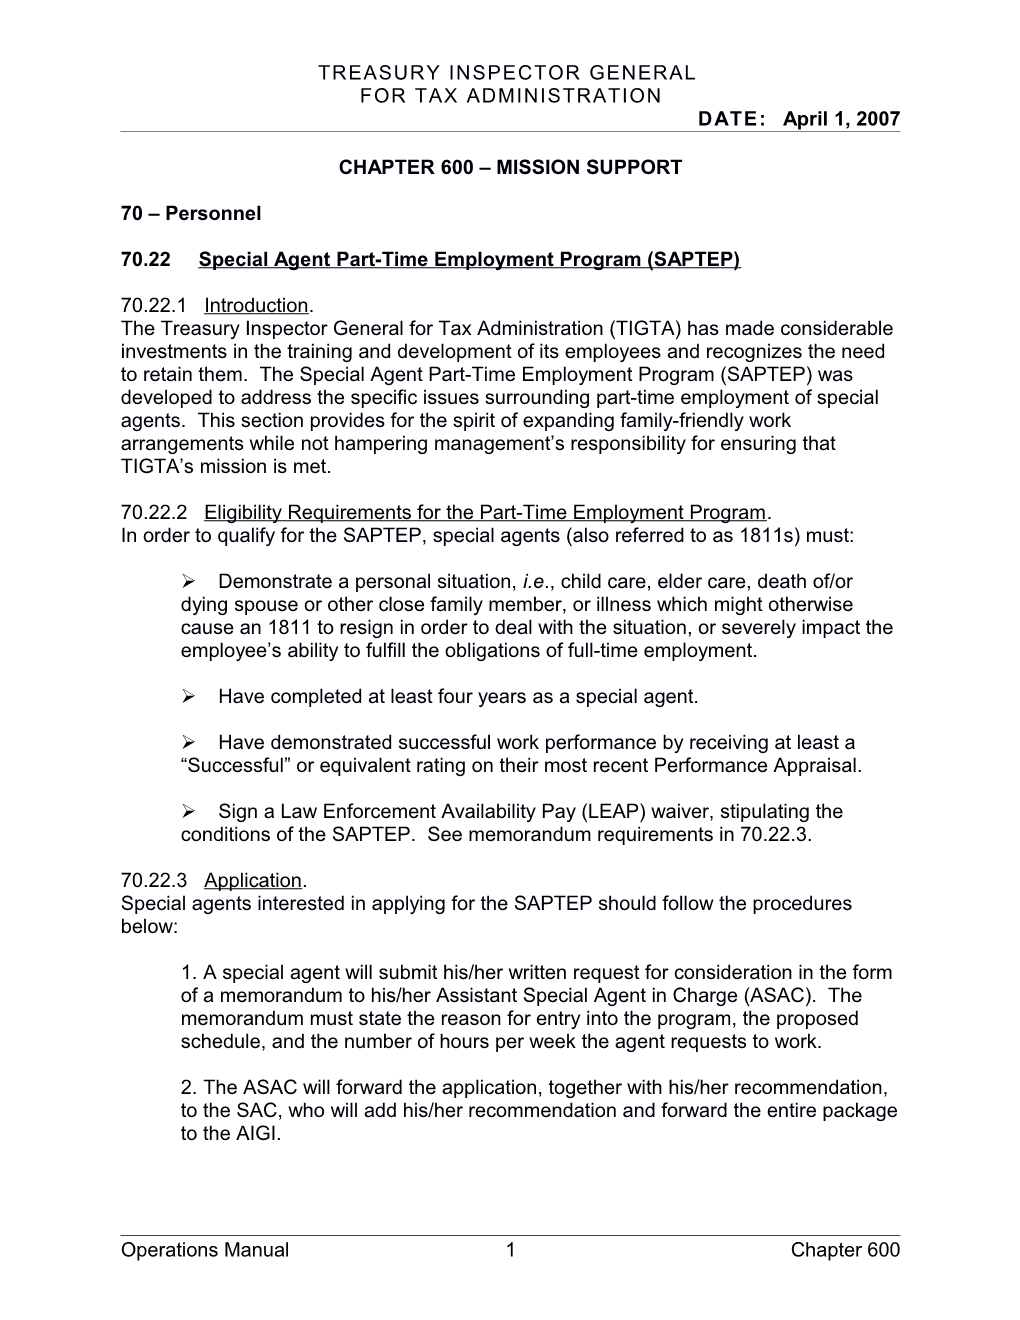 70.22 Special Agent Part-Time Employment Program (SAPTEP)